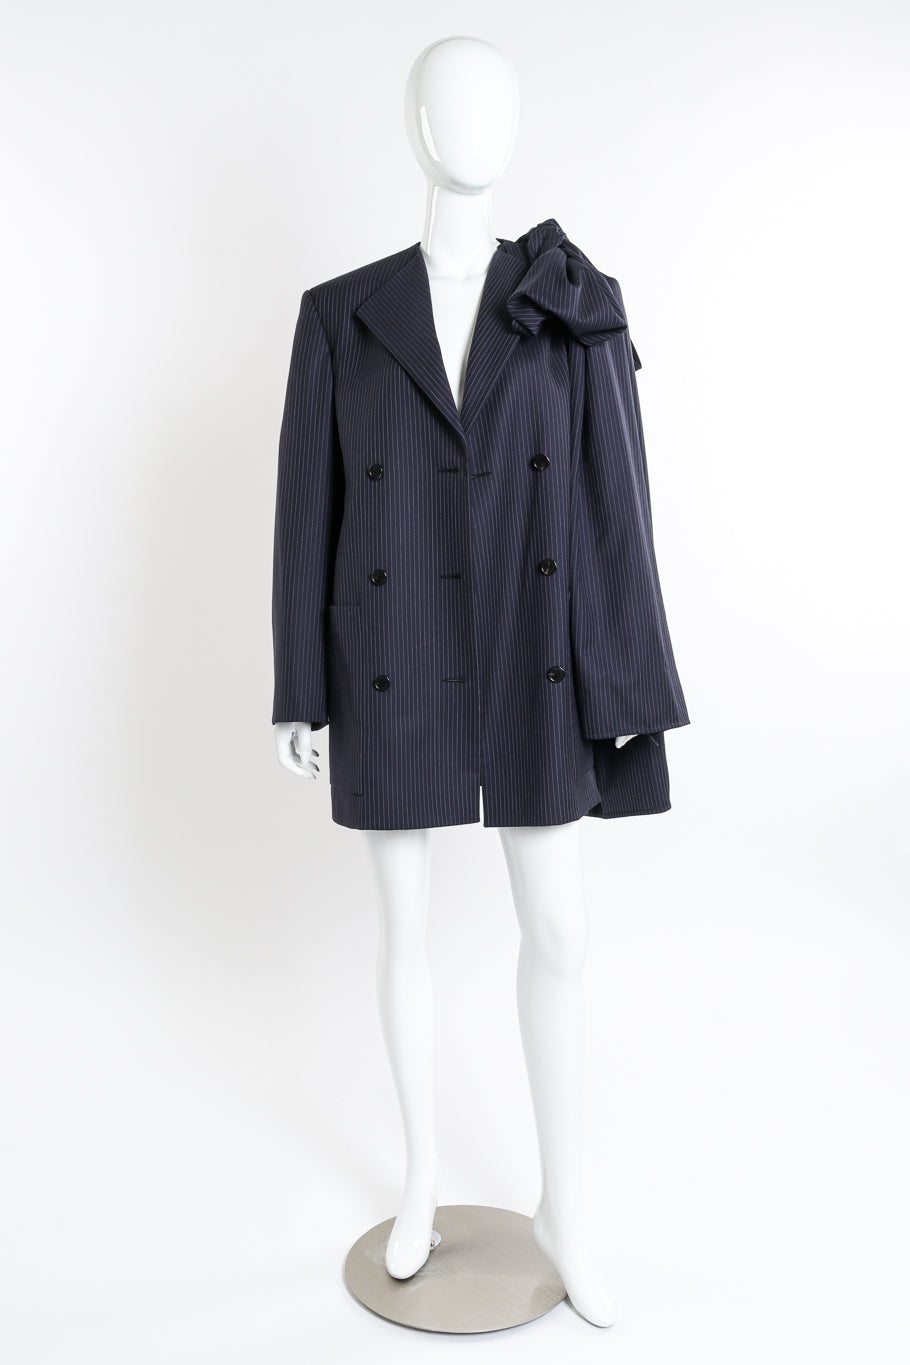 Nina Ricci Pinstripe Bow Jacket front on mannequin @recessla